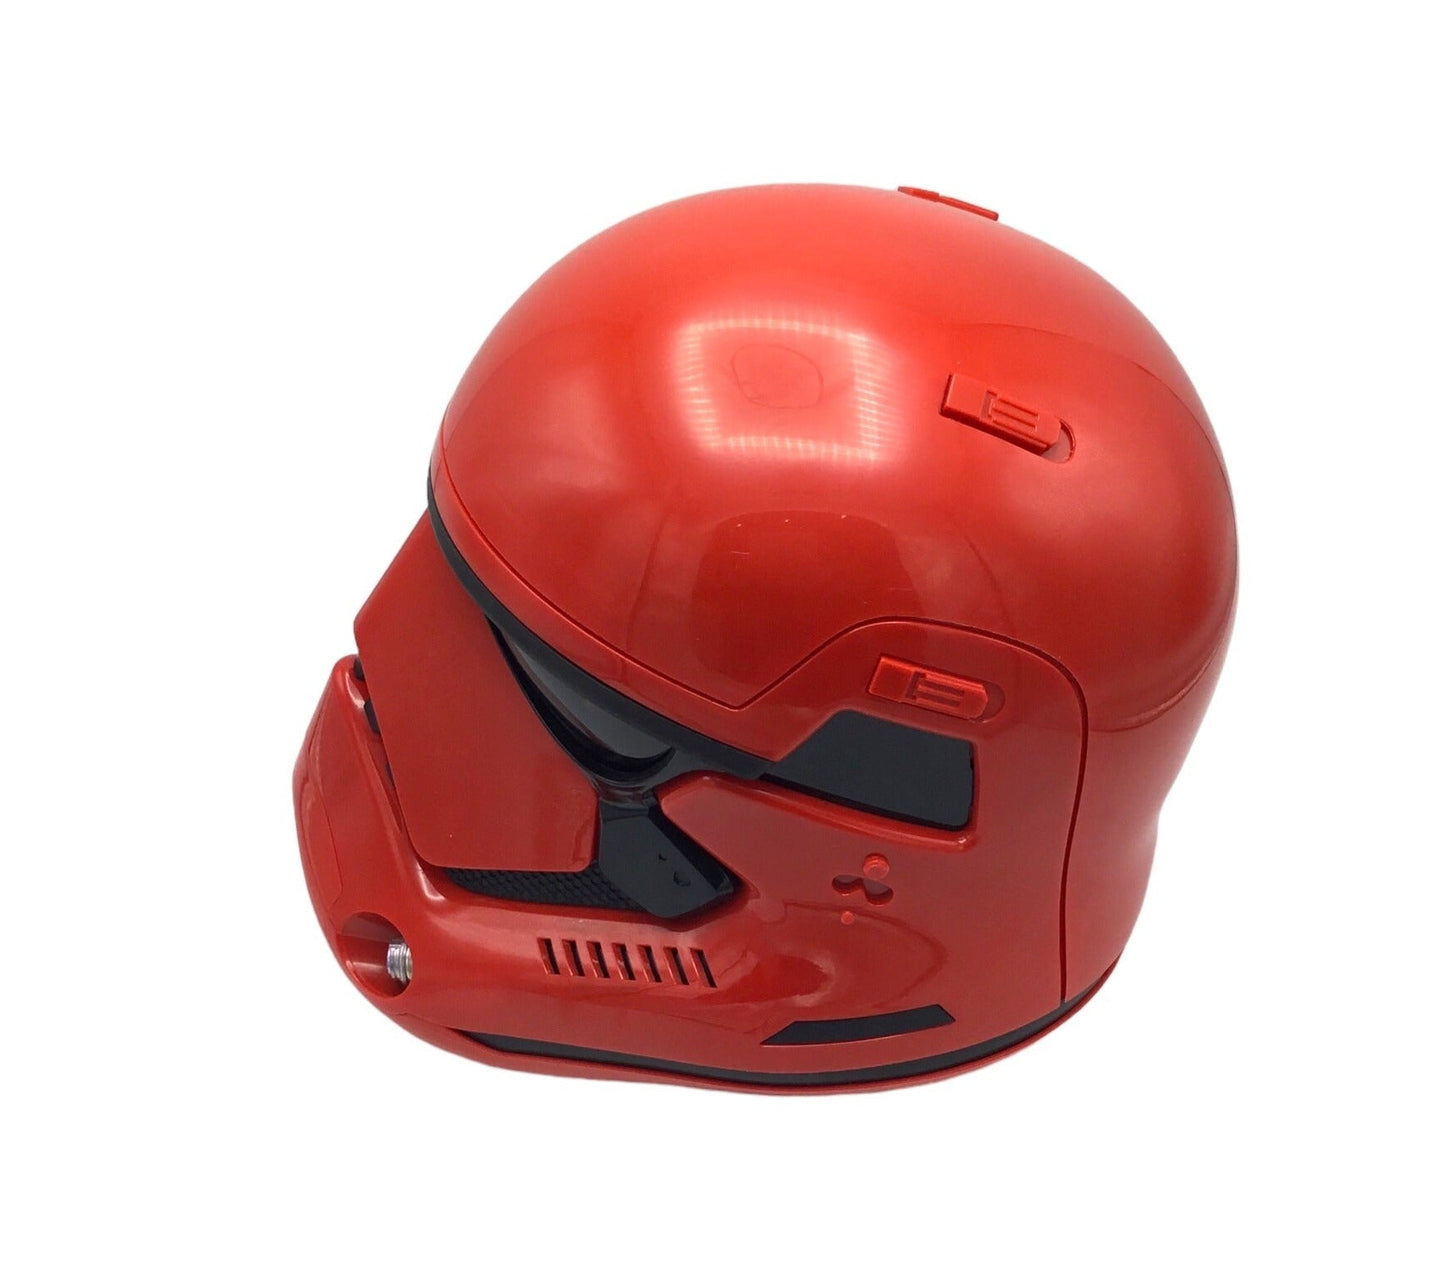 Star Wars Black Series Galaxy's Edge Captain Cardinal Electronic Premium Helmet